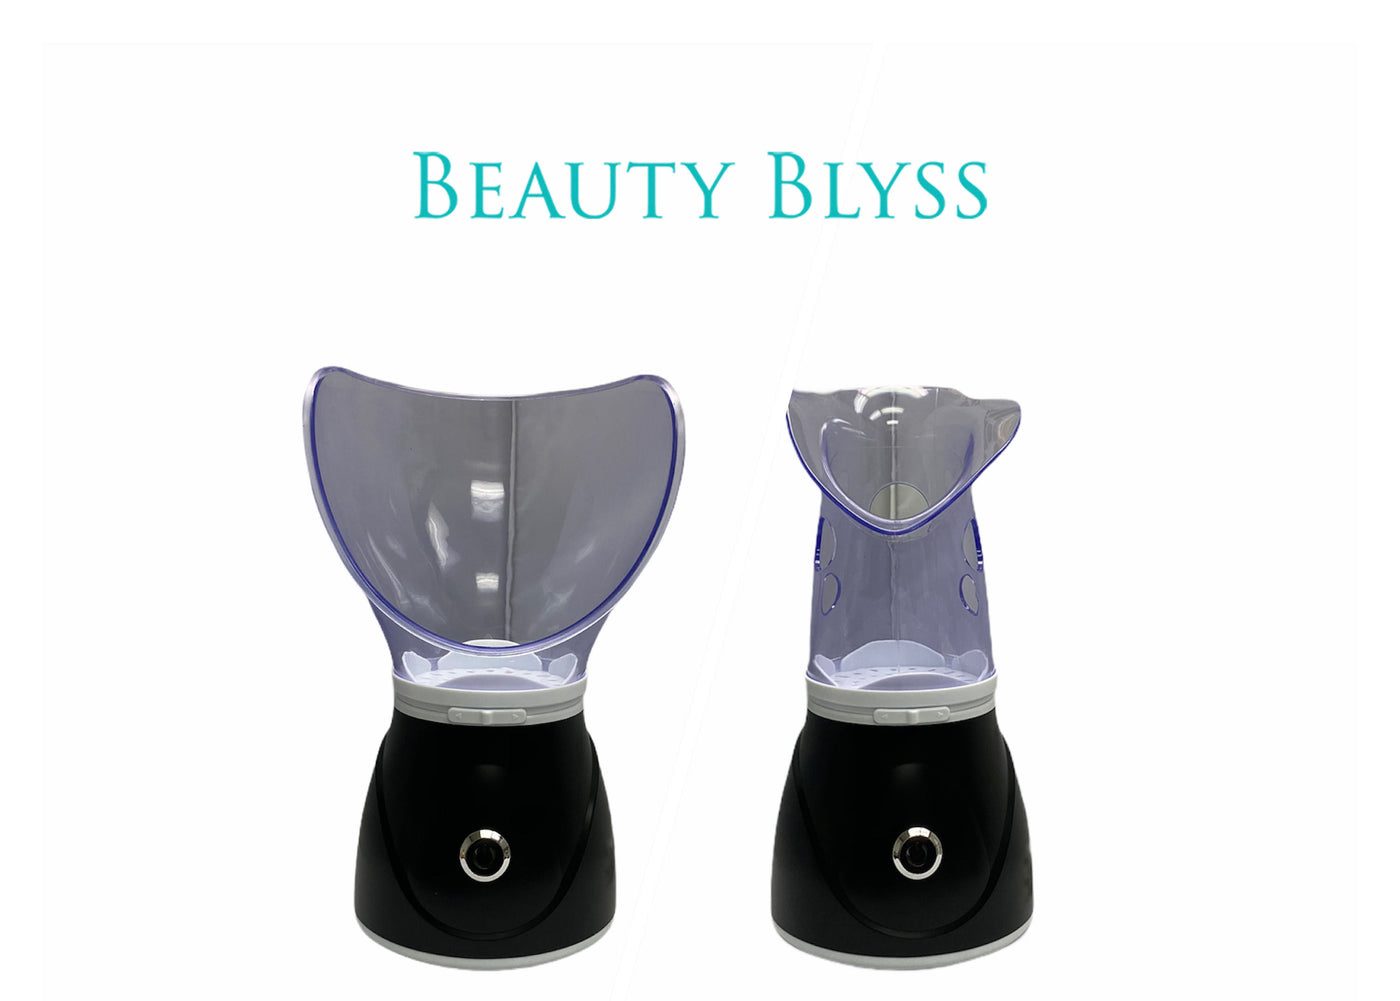 BeautyBlyss Facial Steaming Kit